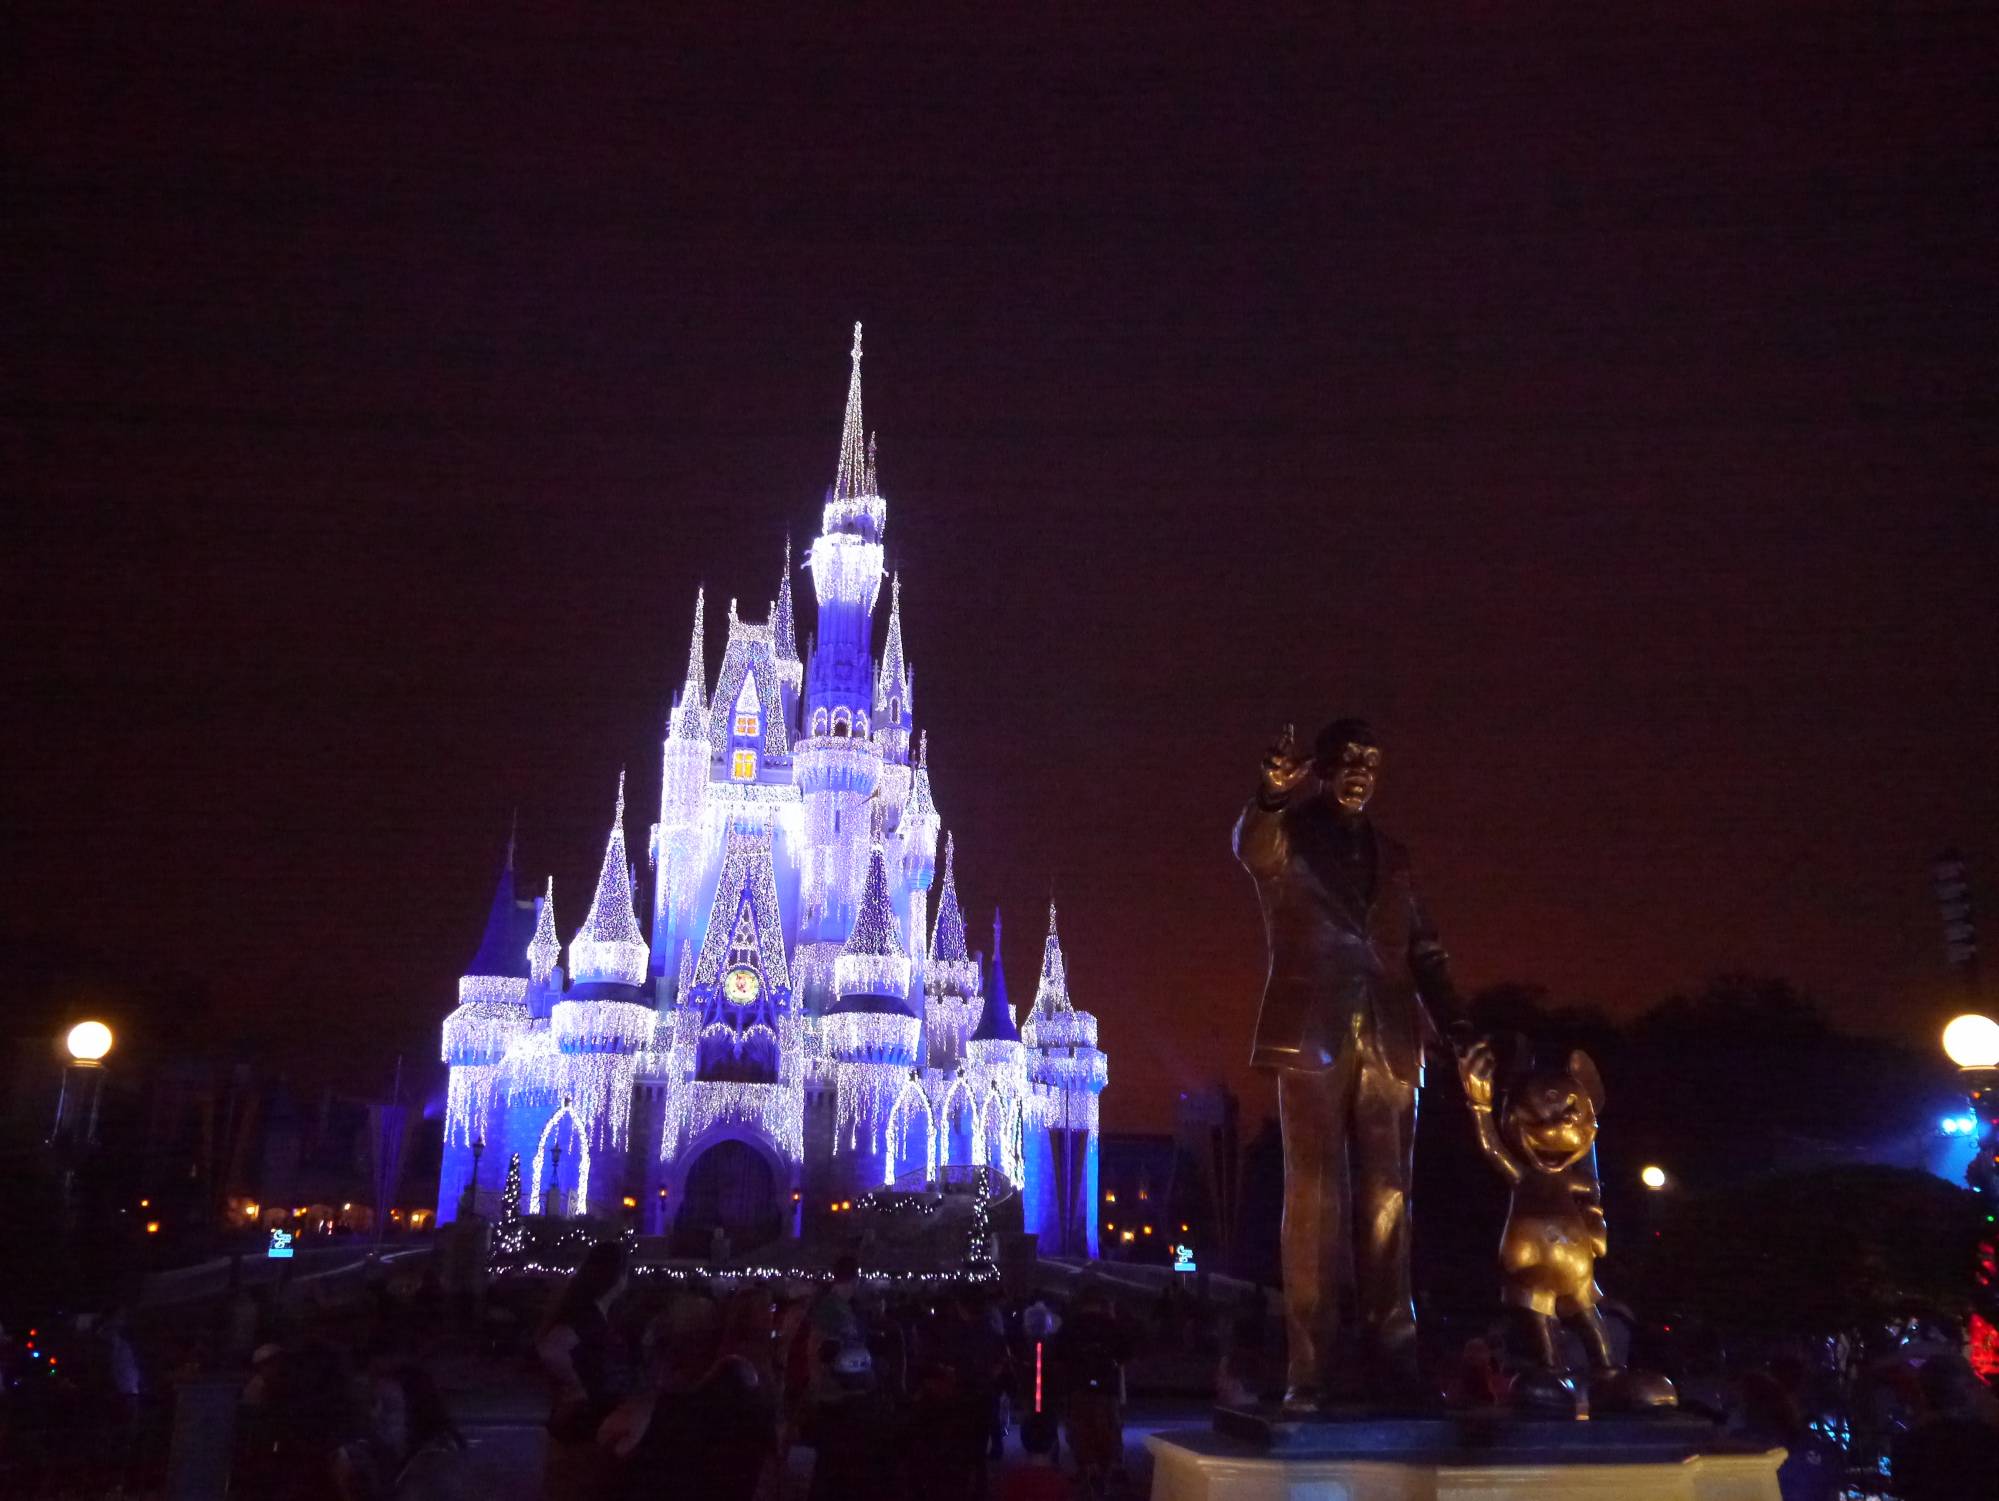 lMagic Kingdom - Cinderella's Castle iced at night